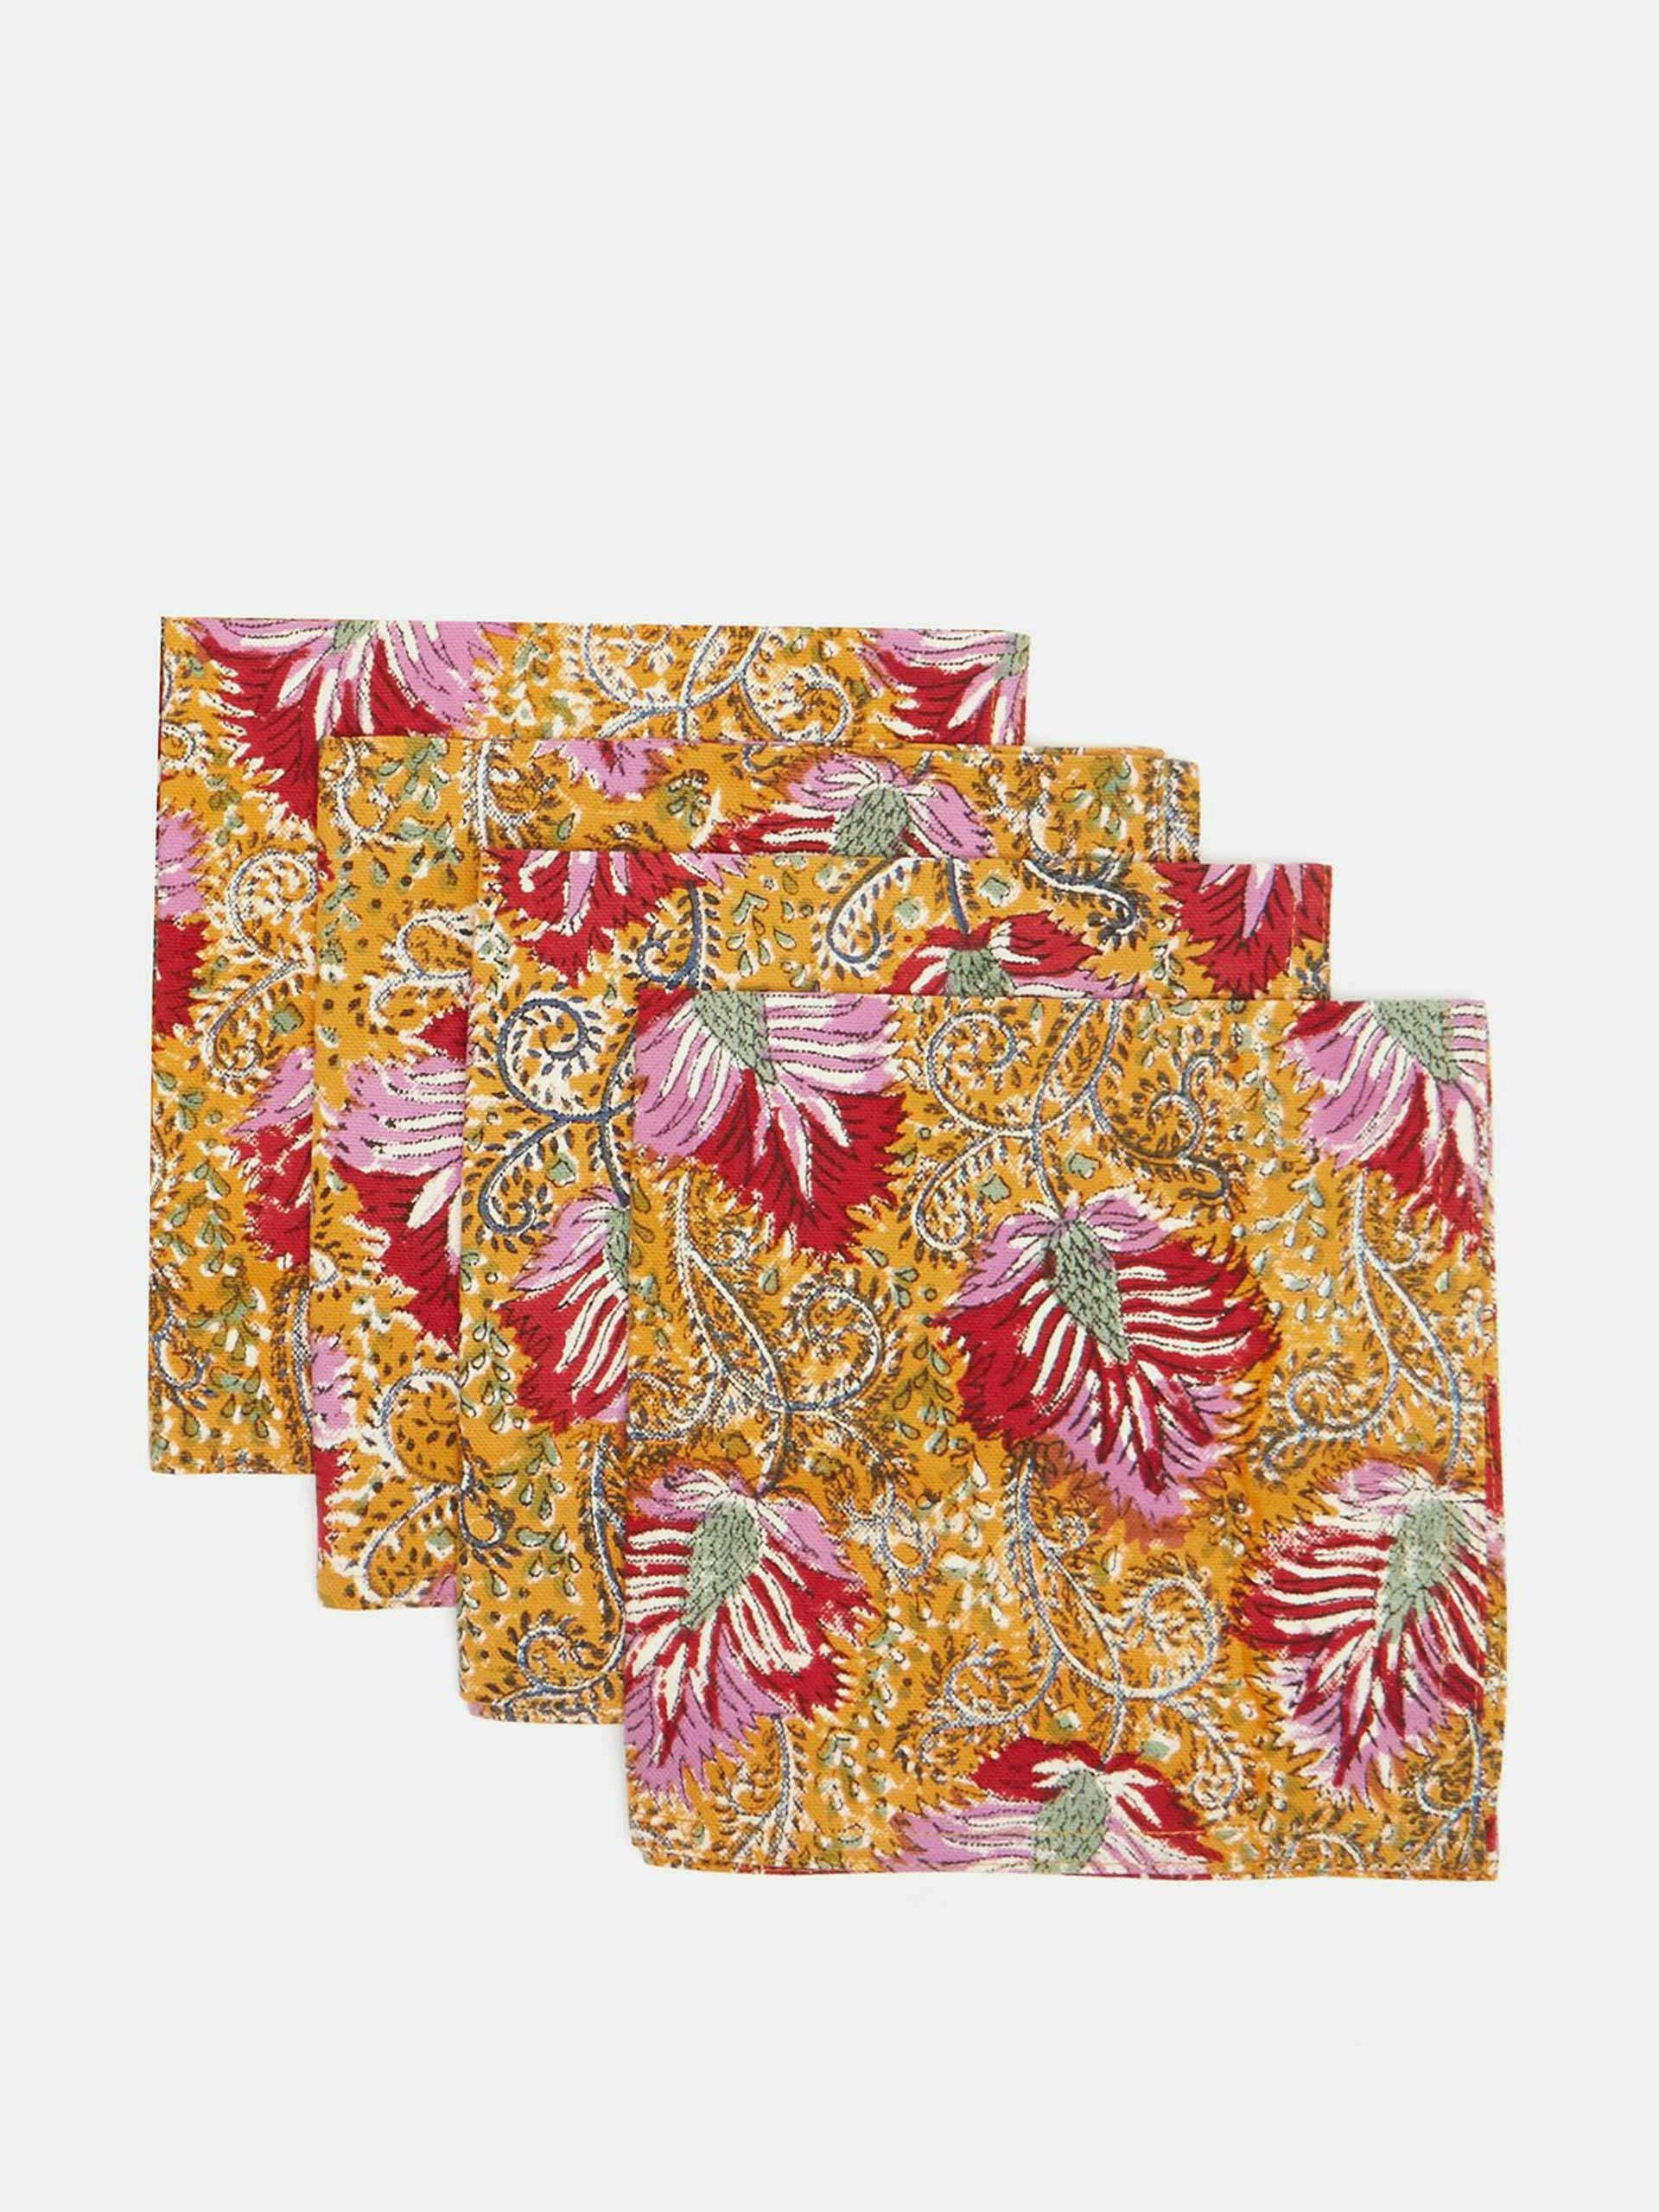 Block-printed cotton napkins (set of 4)